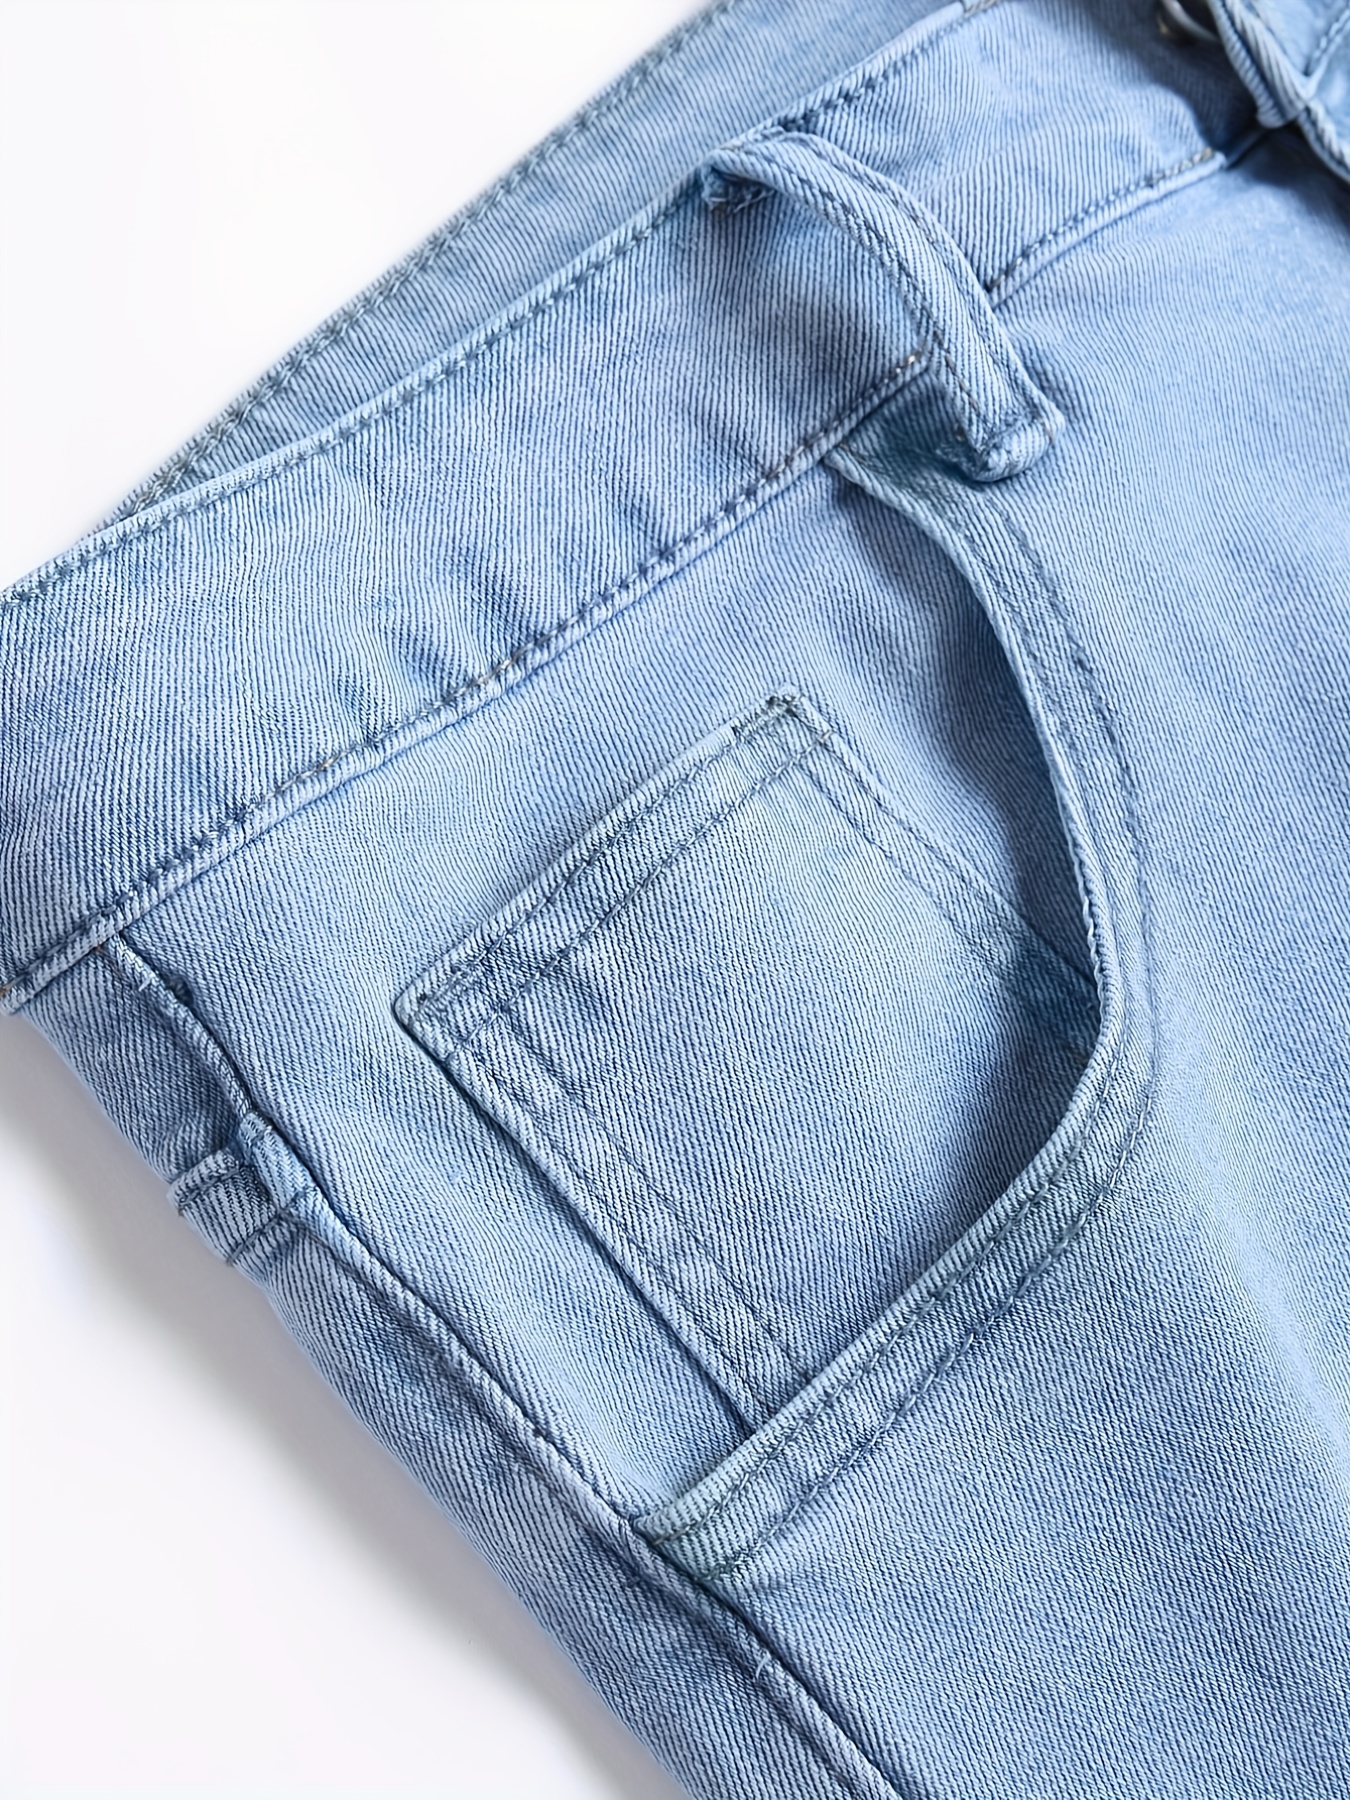 Uniqlo Jeggings Jeans Women’s Size Medium Blue Denim High Mid-Rise Pants 